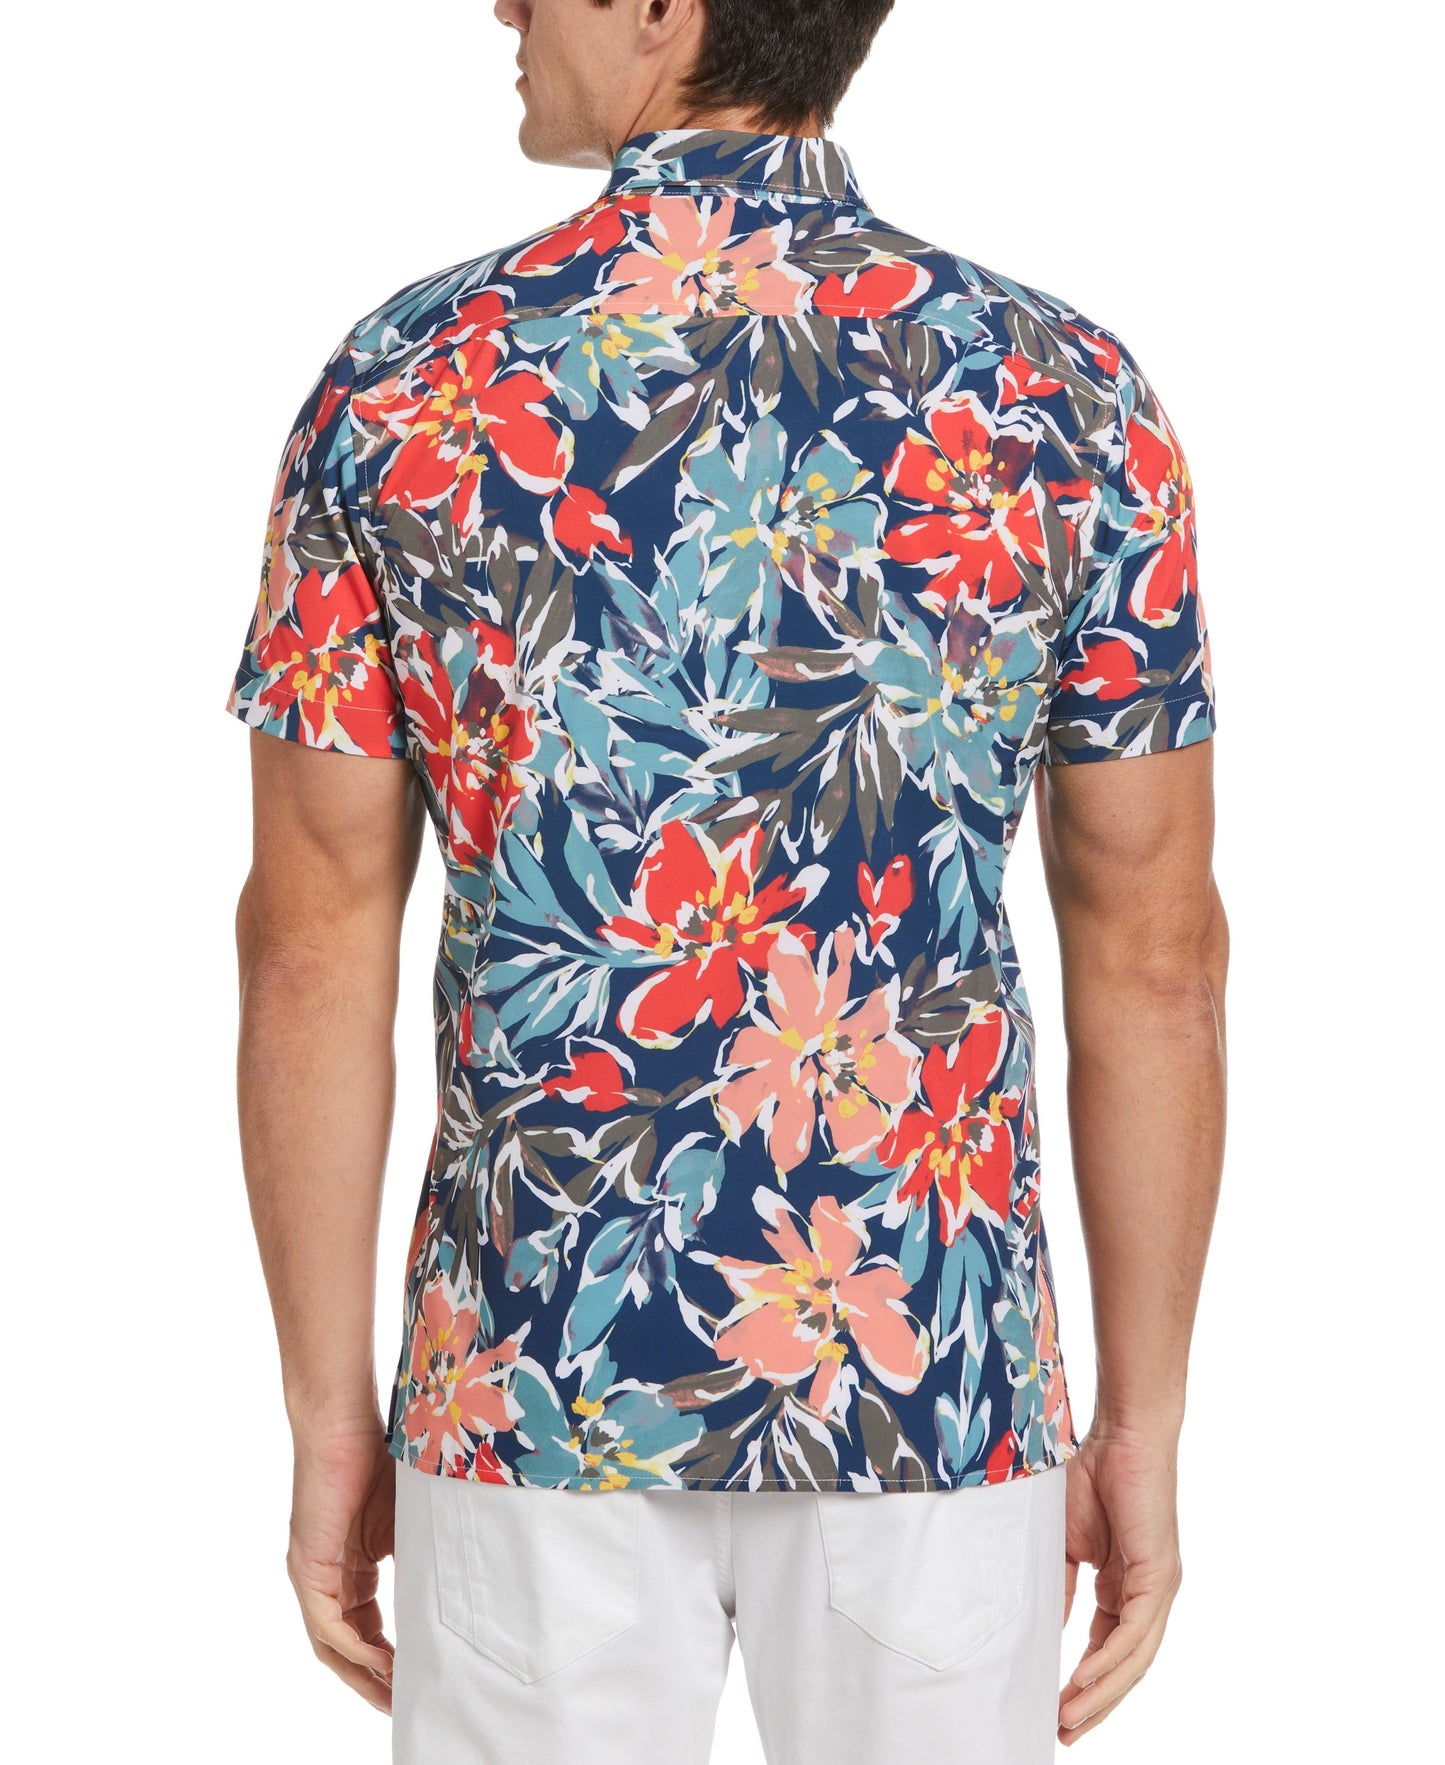 Total Stretch Tropical Floral Print Shirt